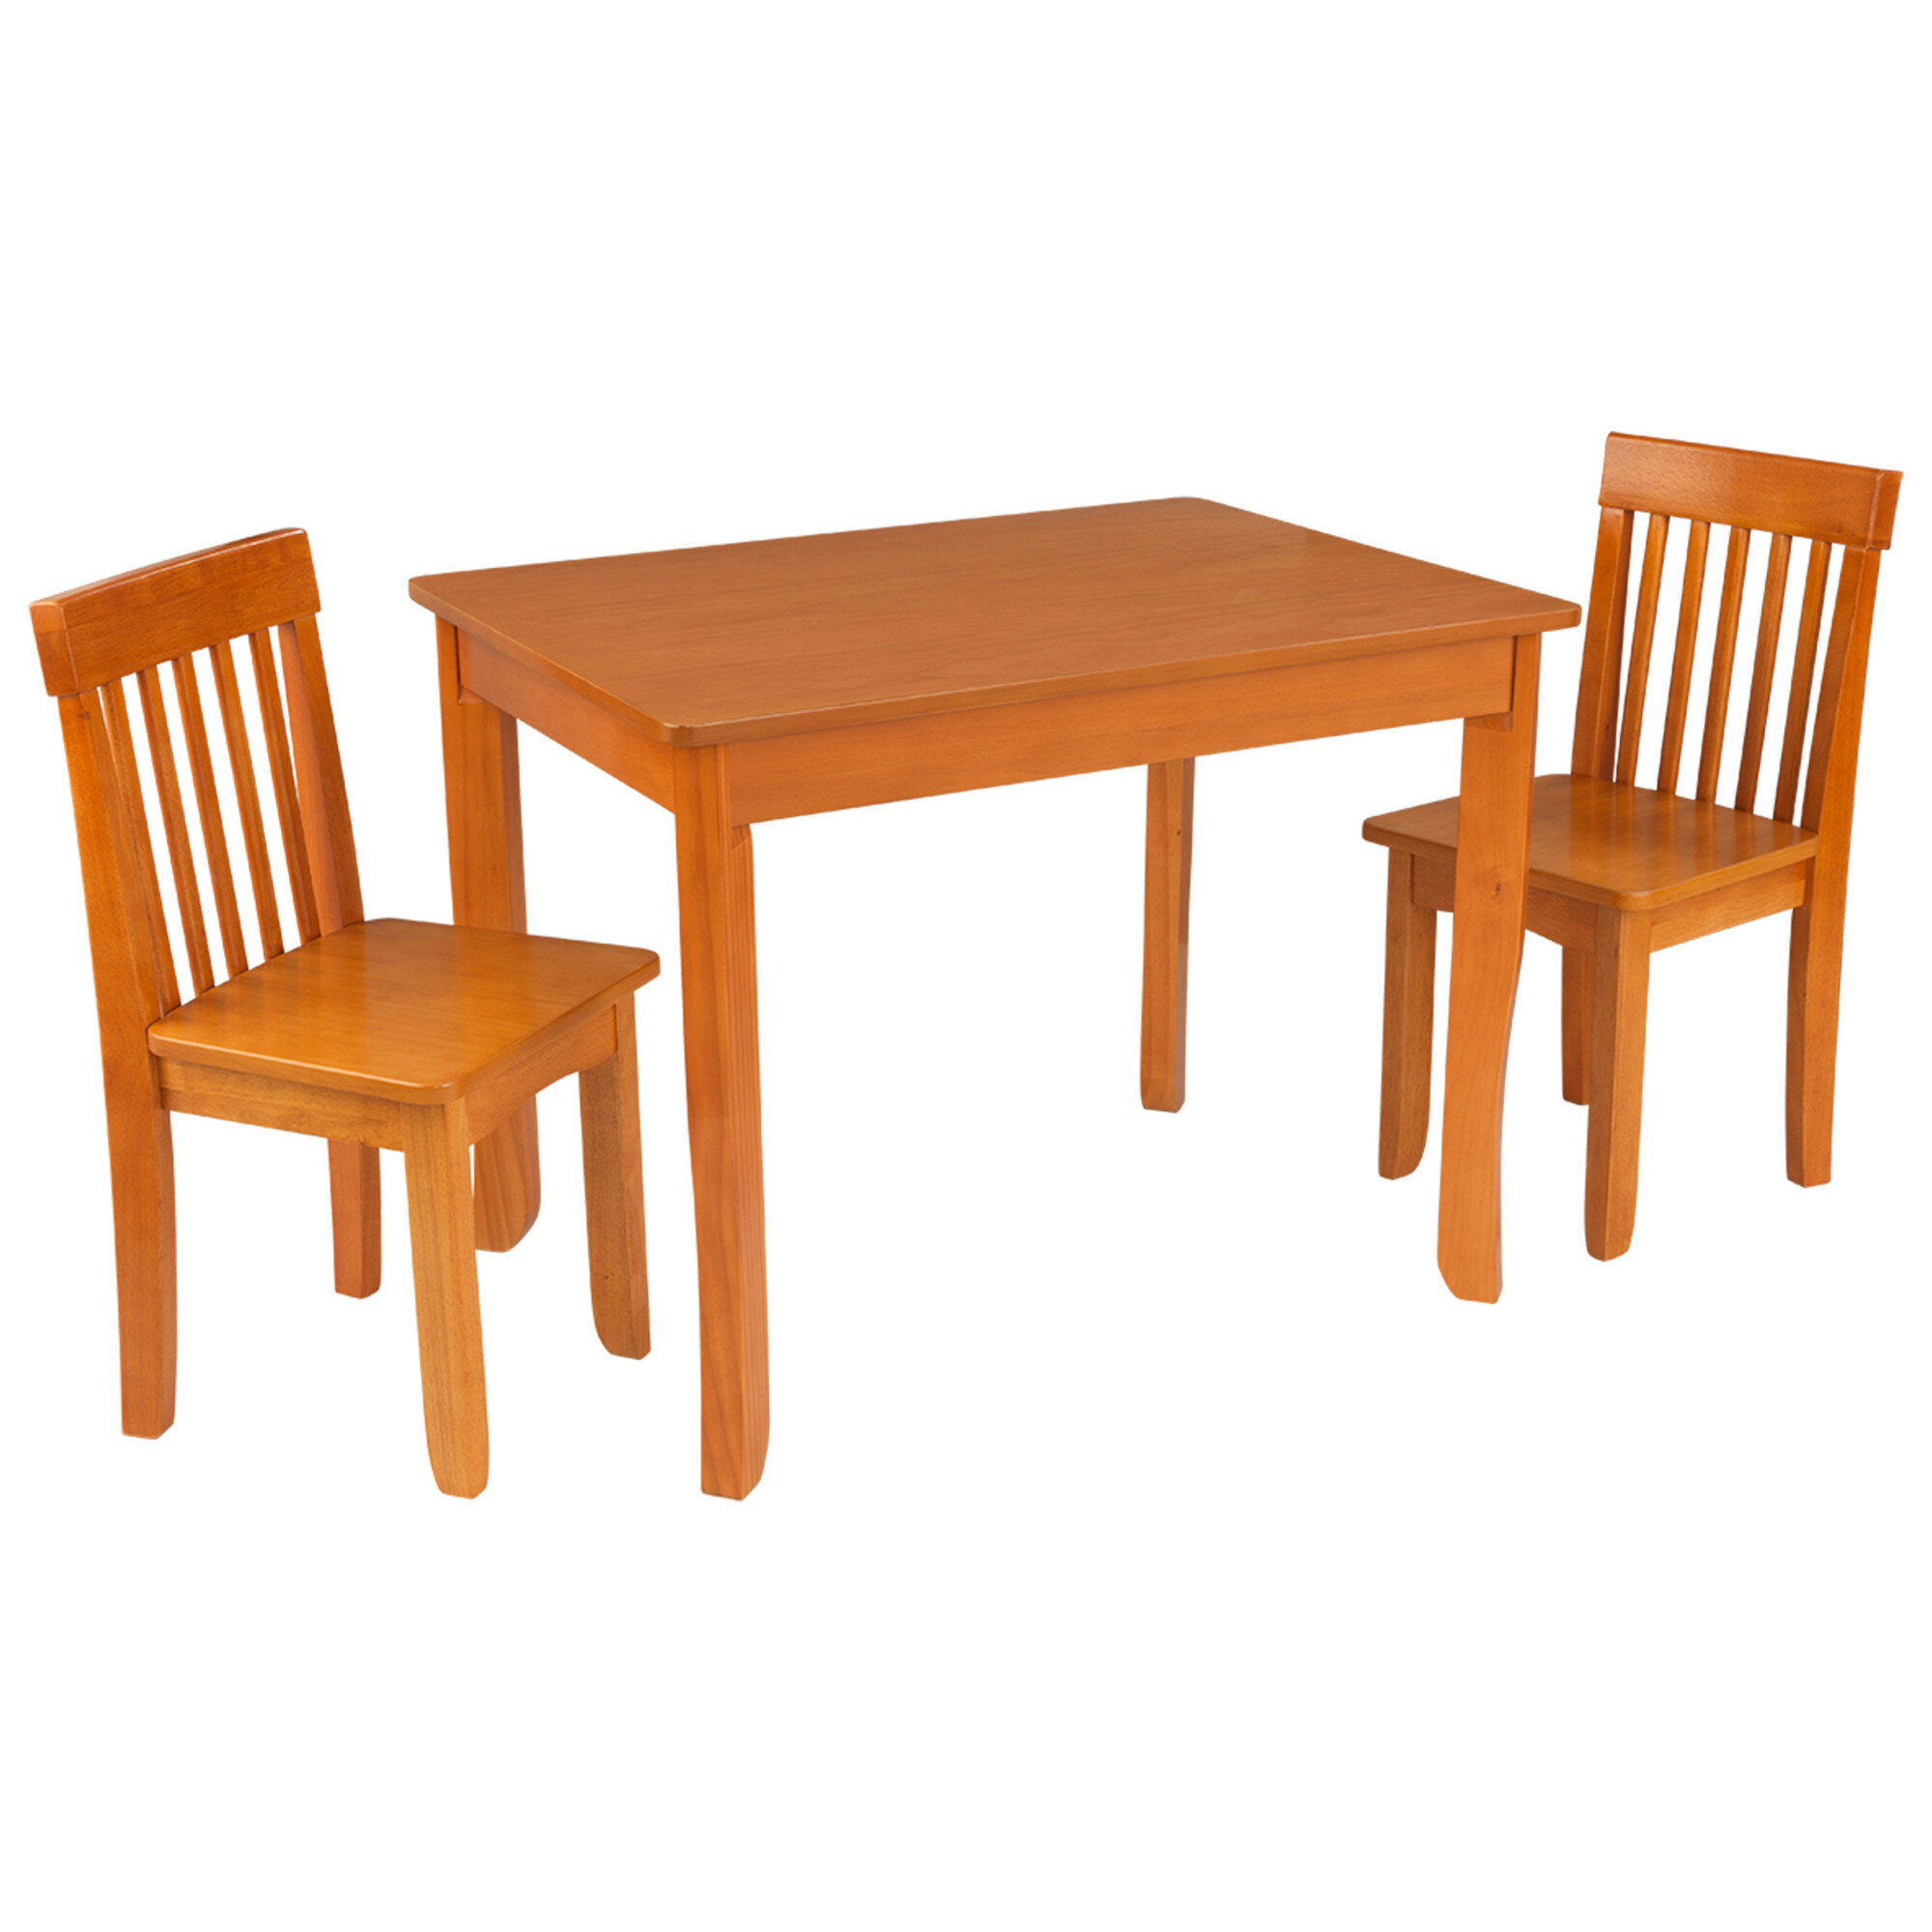 kidkraft table and chairs amazon